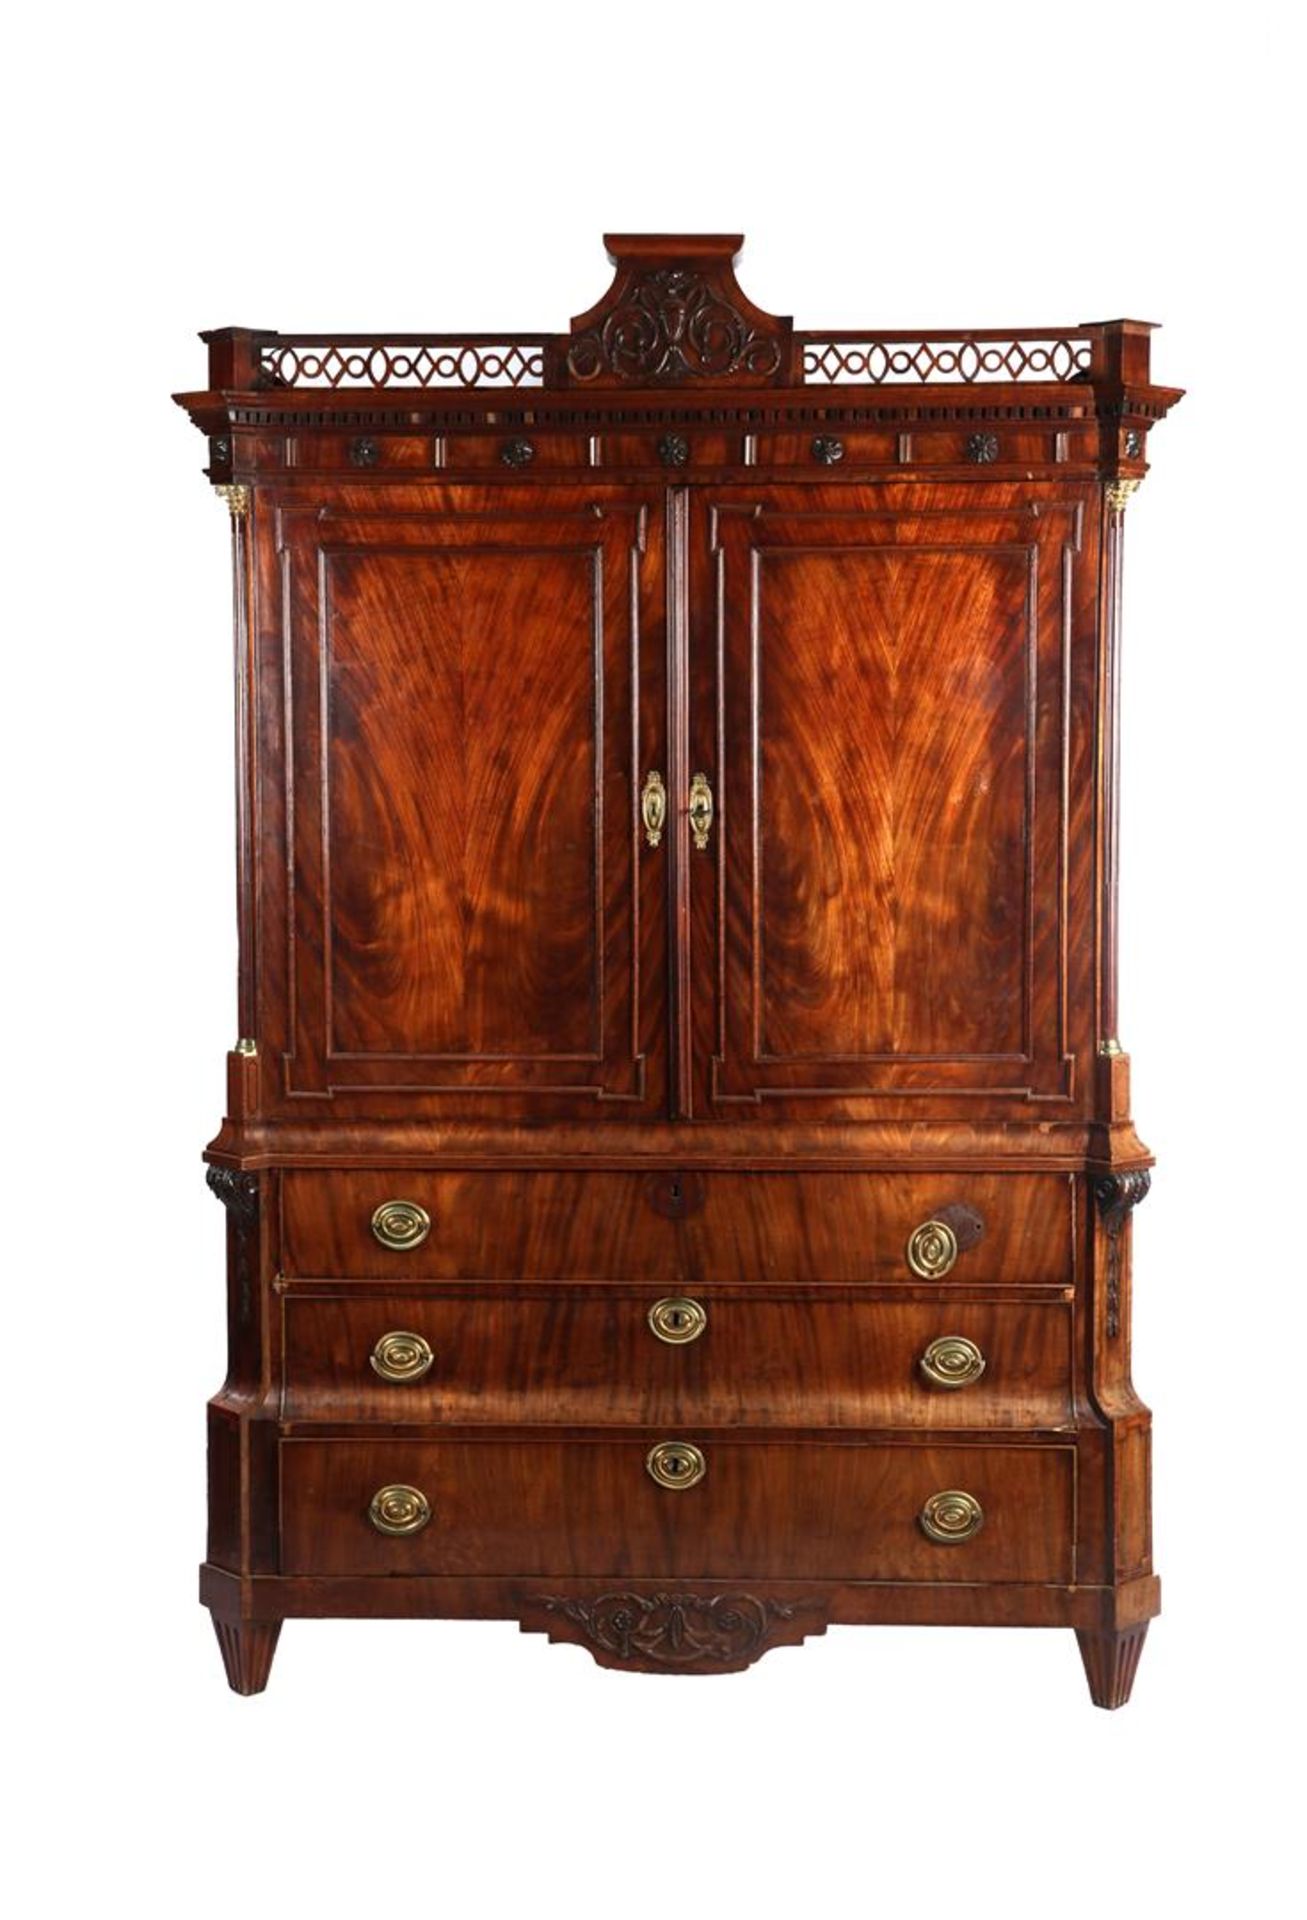 Transitional period Louis Seize - Empire mahogany veneer on oak cabinet